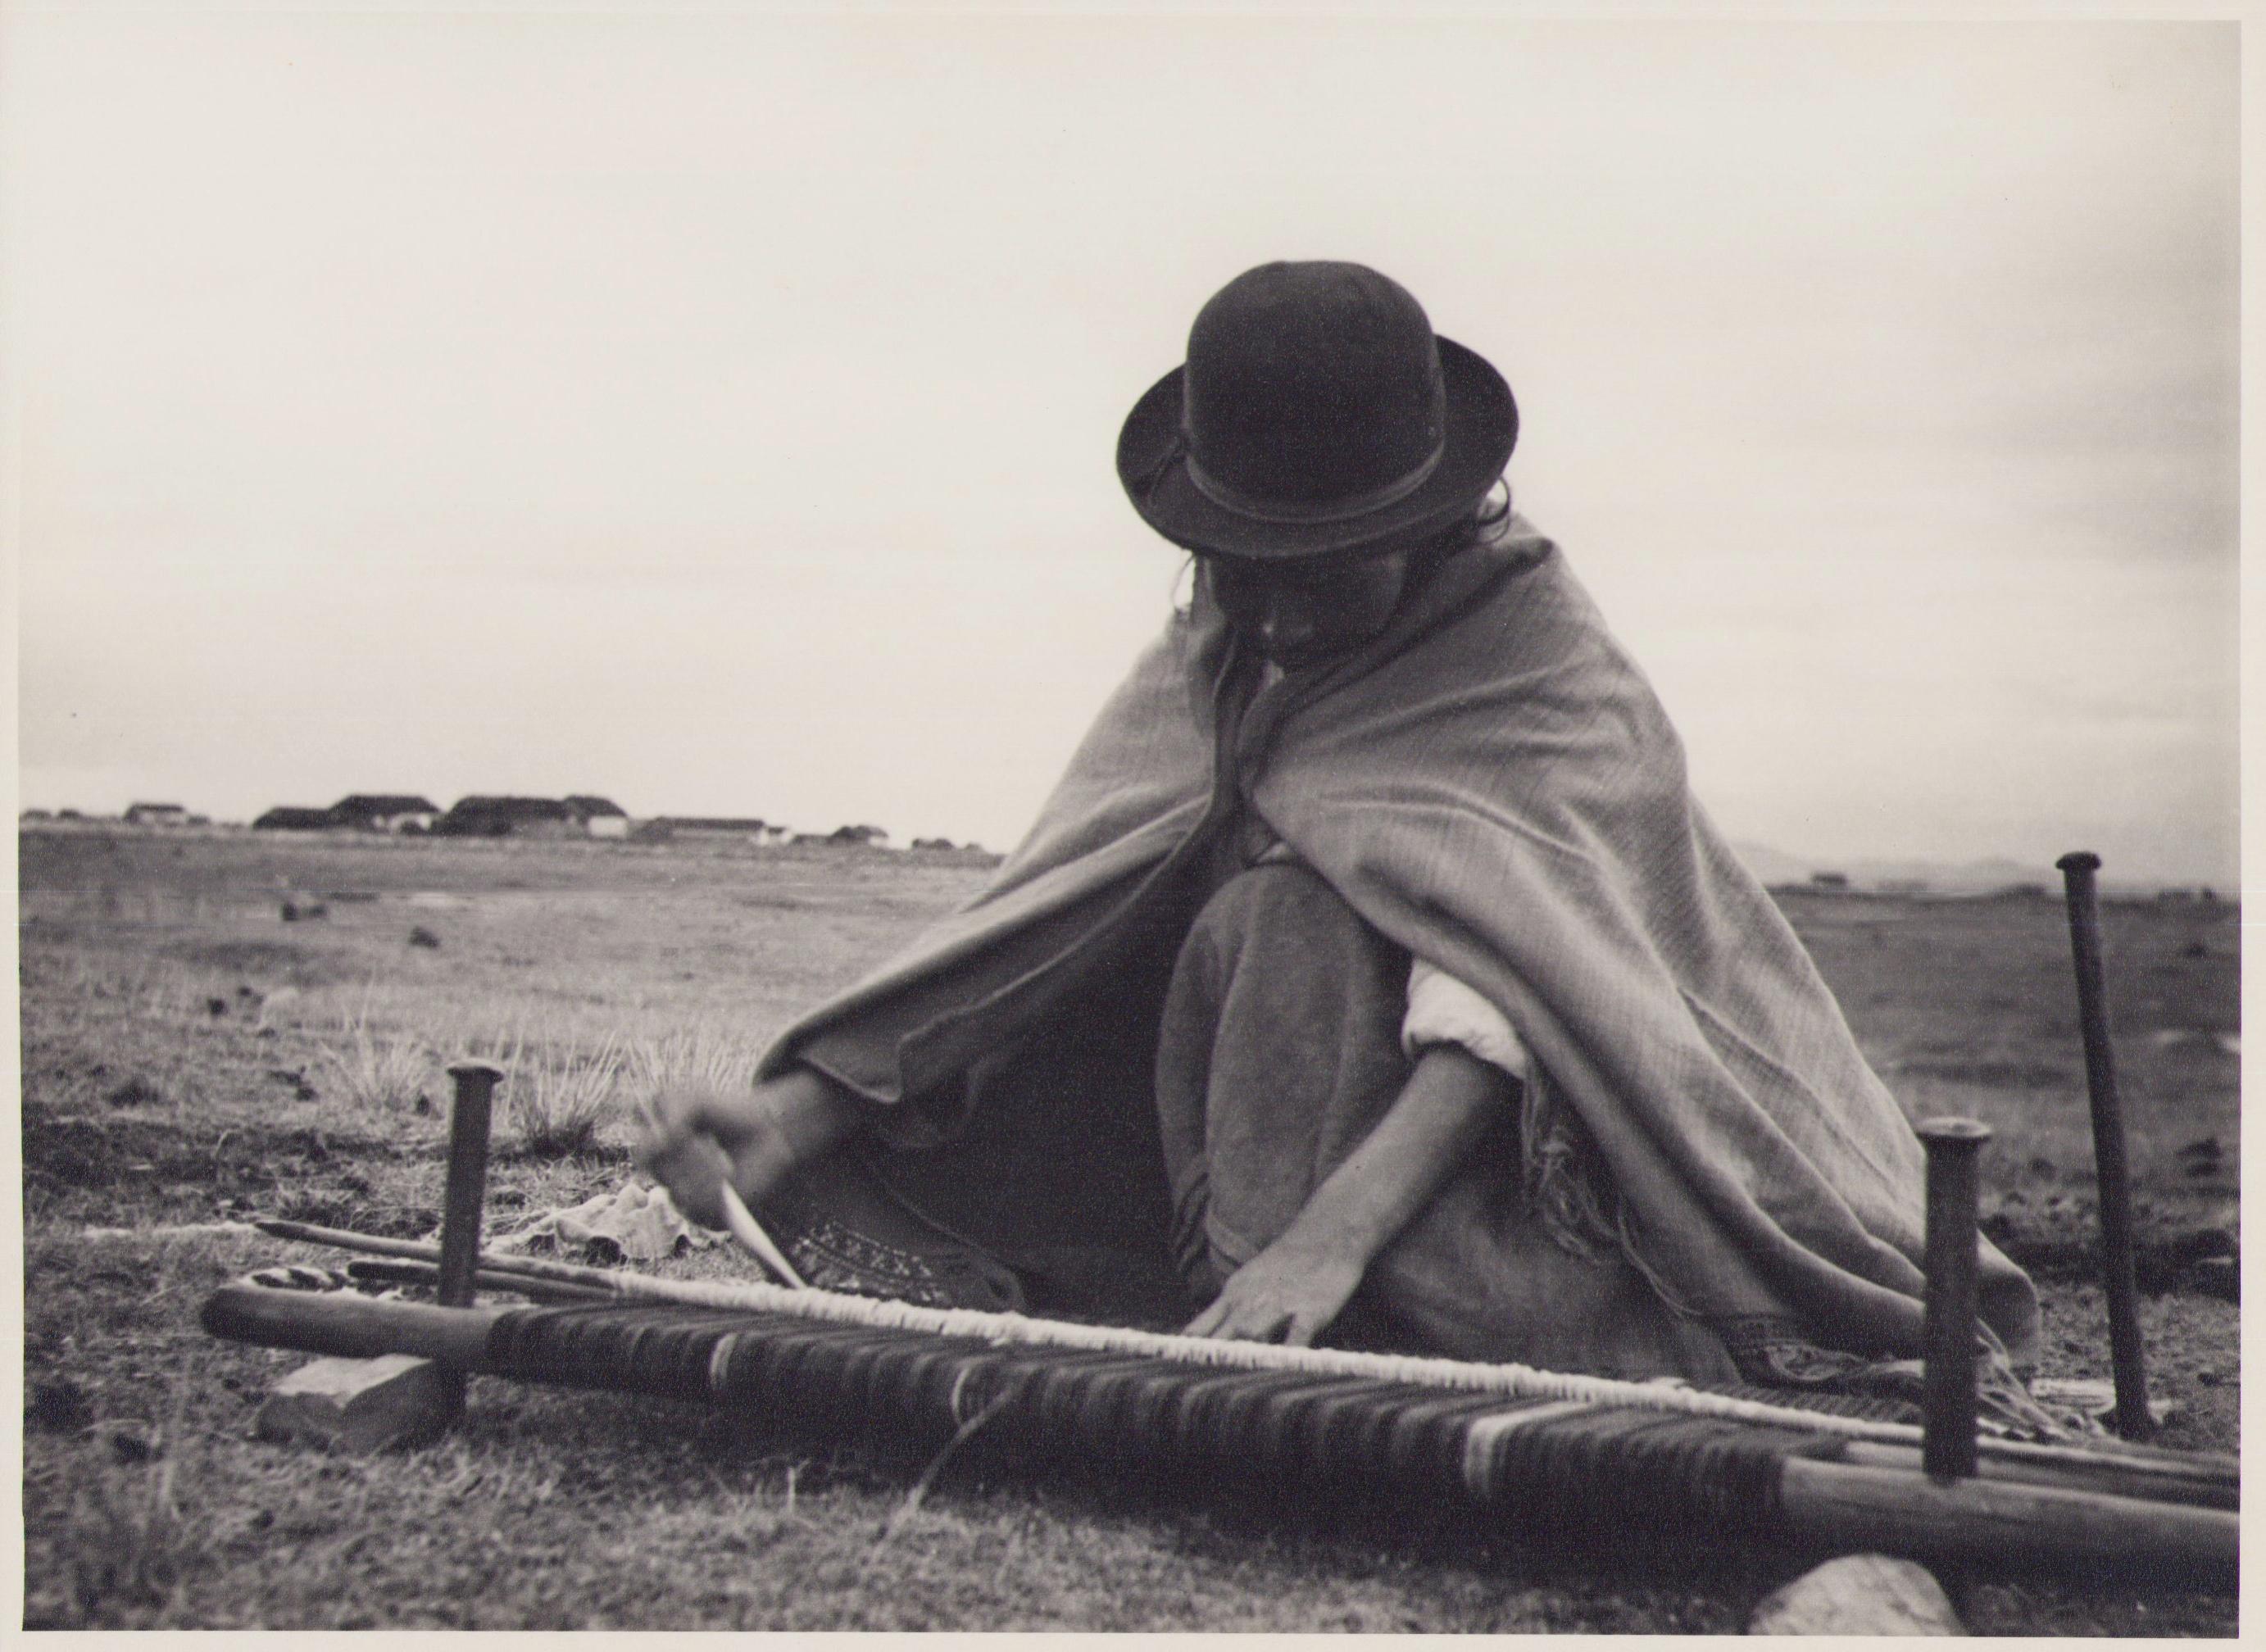 Hanna Seidel Portrait Photograph - Bolivia, Handcraft, Black and White Photography, 1960s, 17, 2 x 23, 5 cm